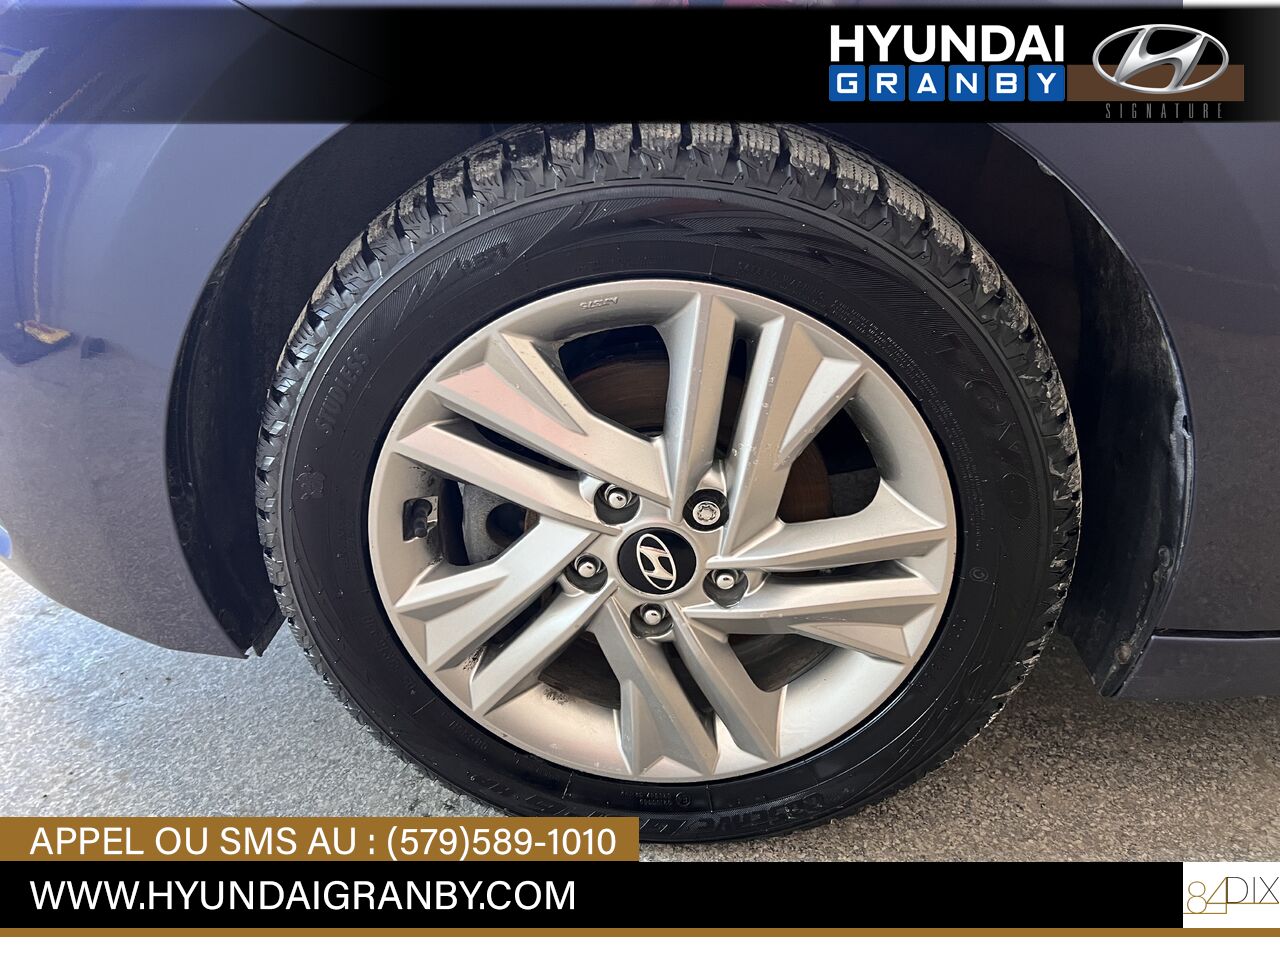 Hyundai Elantra 2019 Granby - photo #31